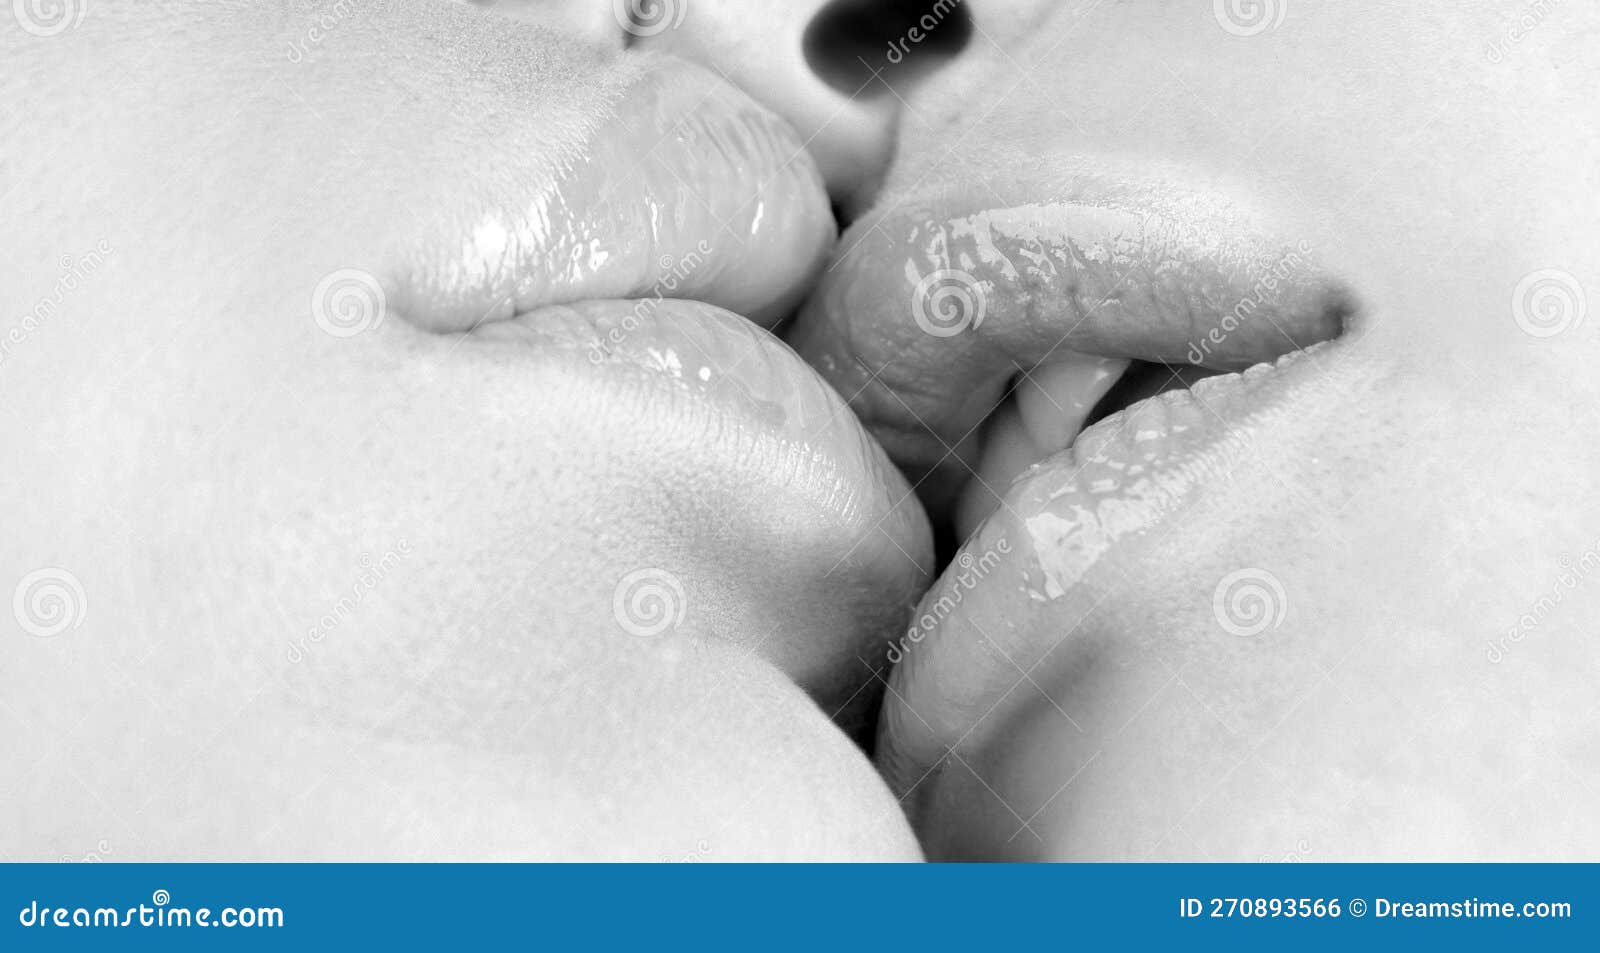 лесбийский поцелуй » HD фильмы онлайн